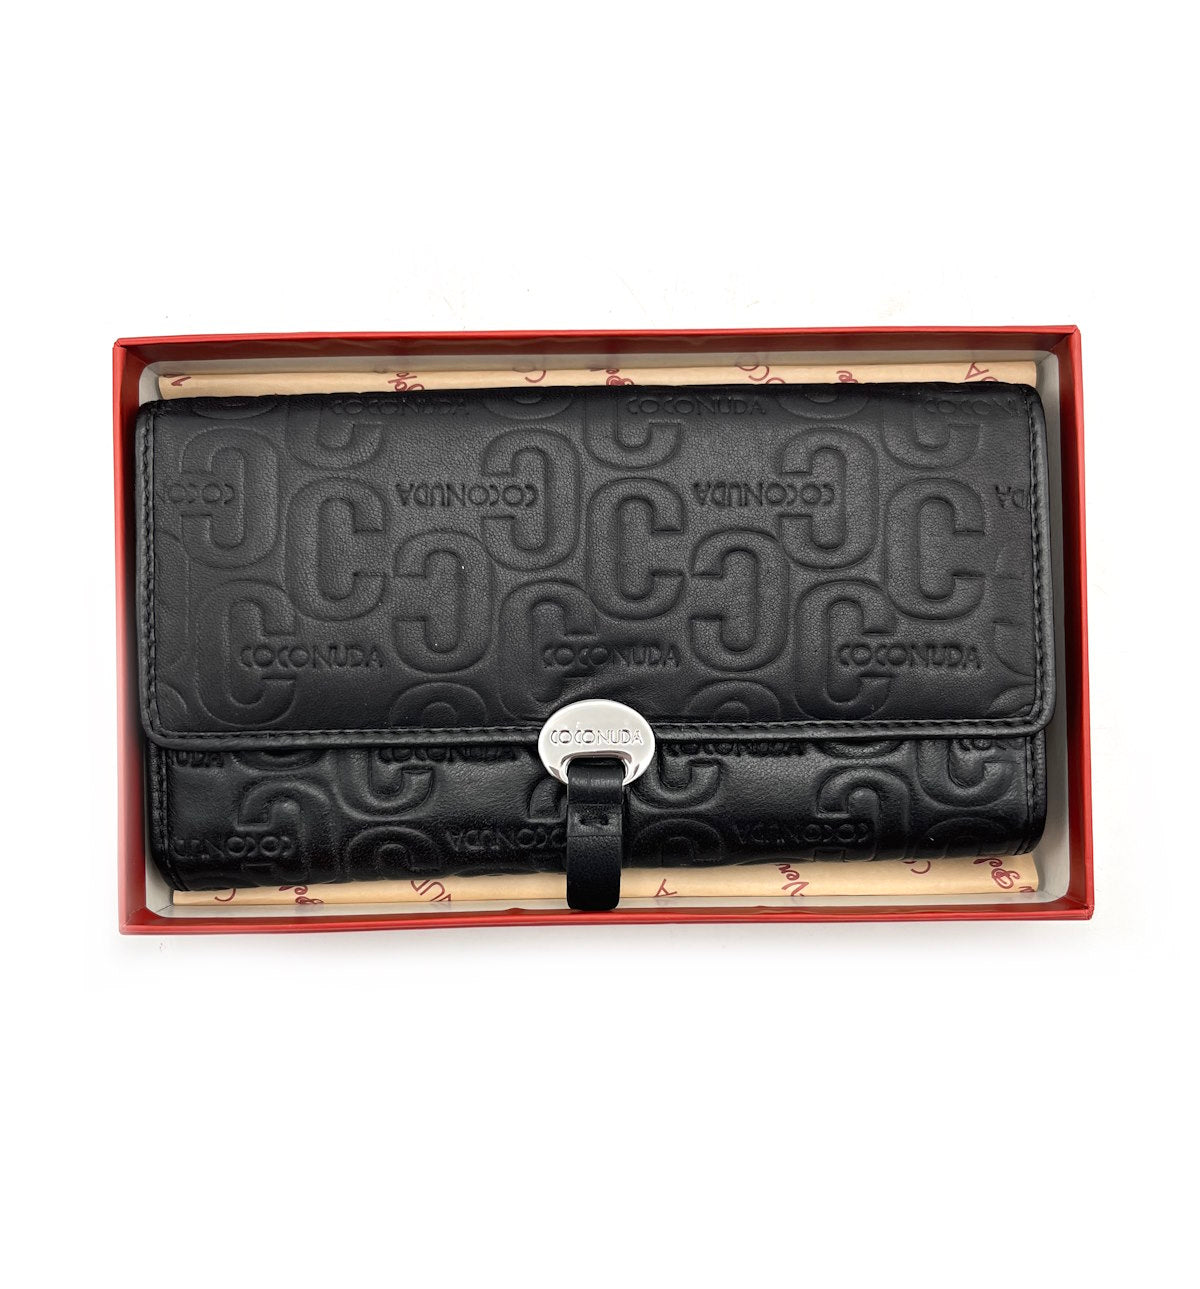 Genuine leather wallet, Coconuda for women, art. PDK322-70